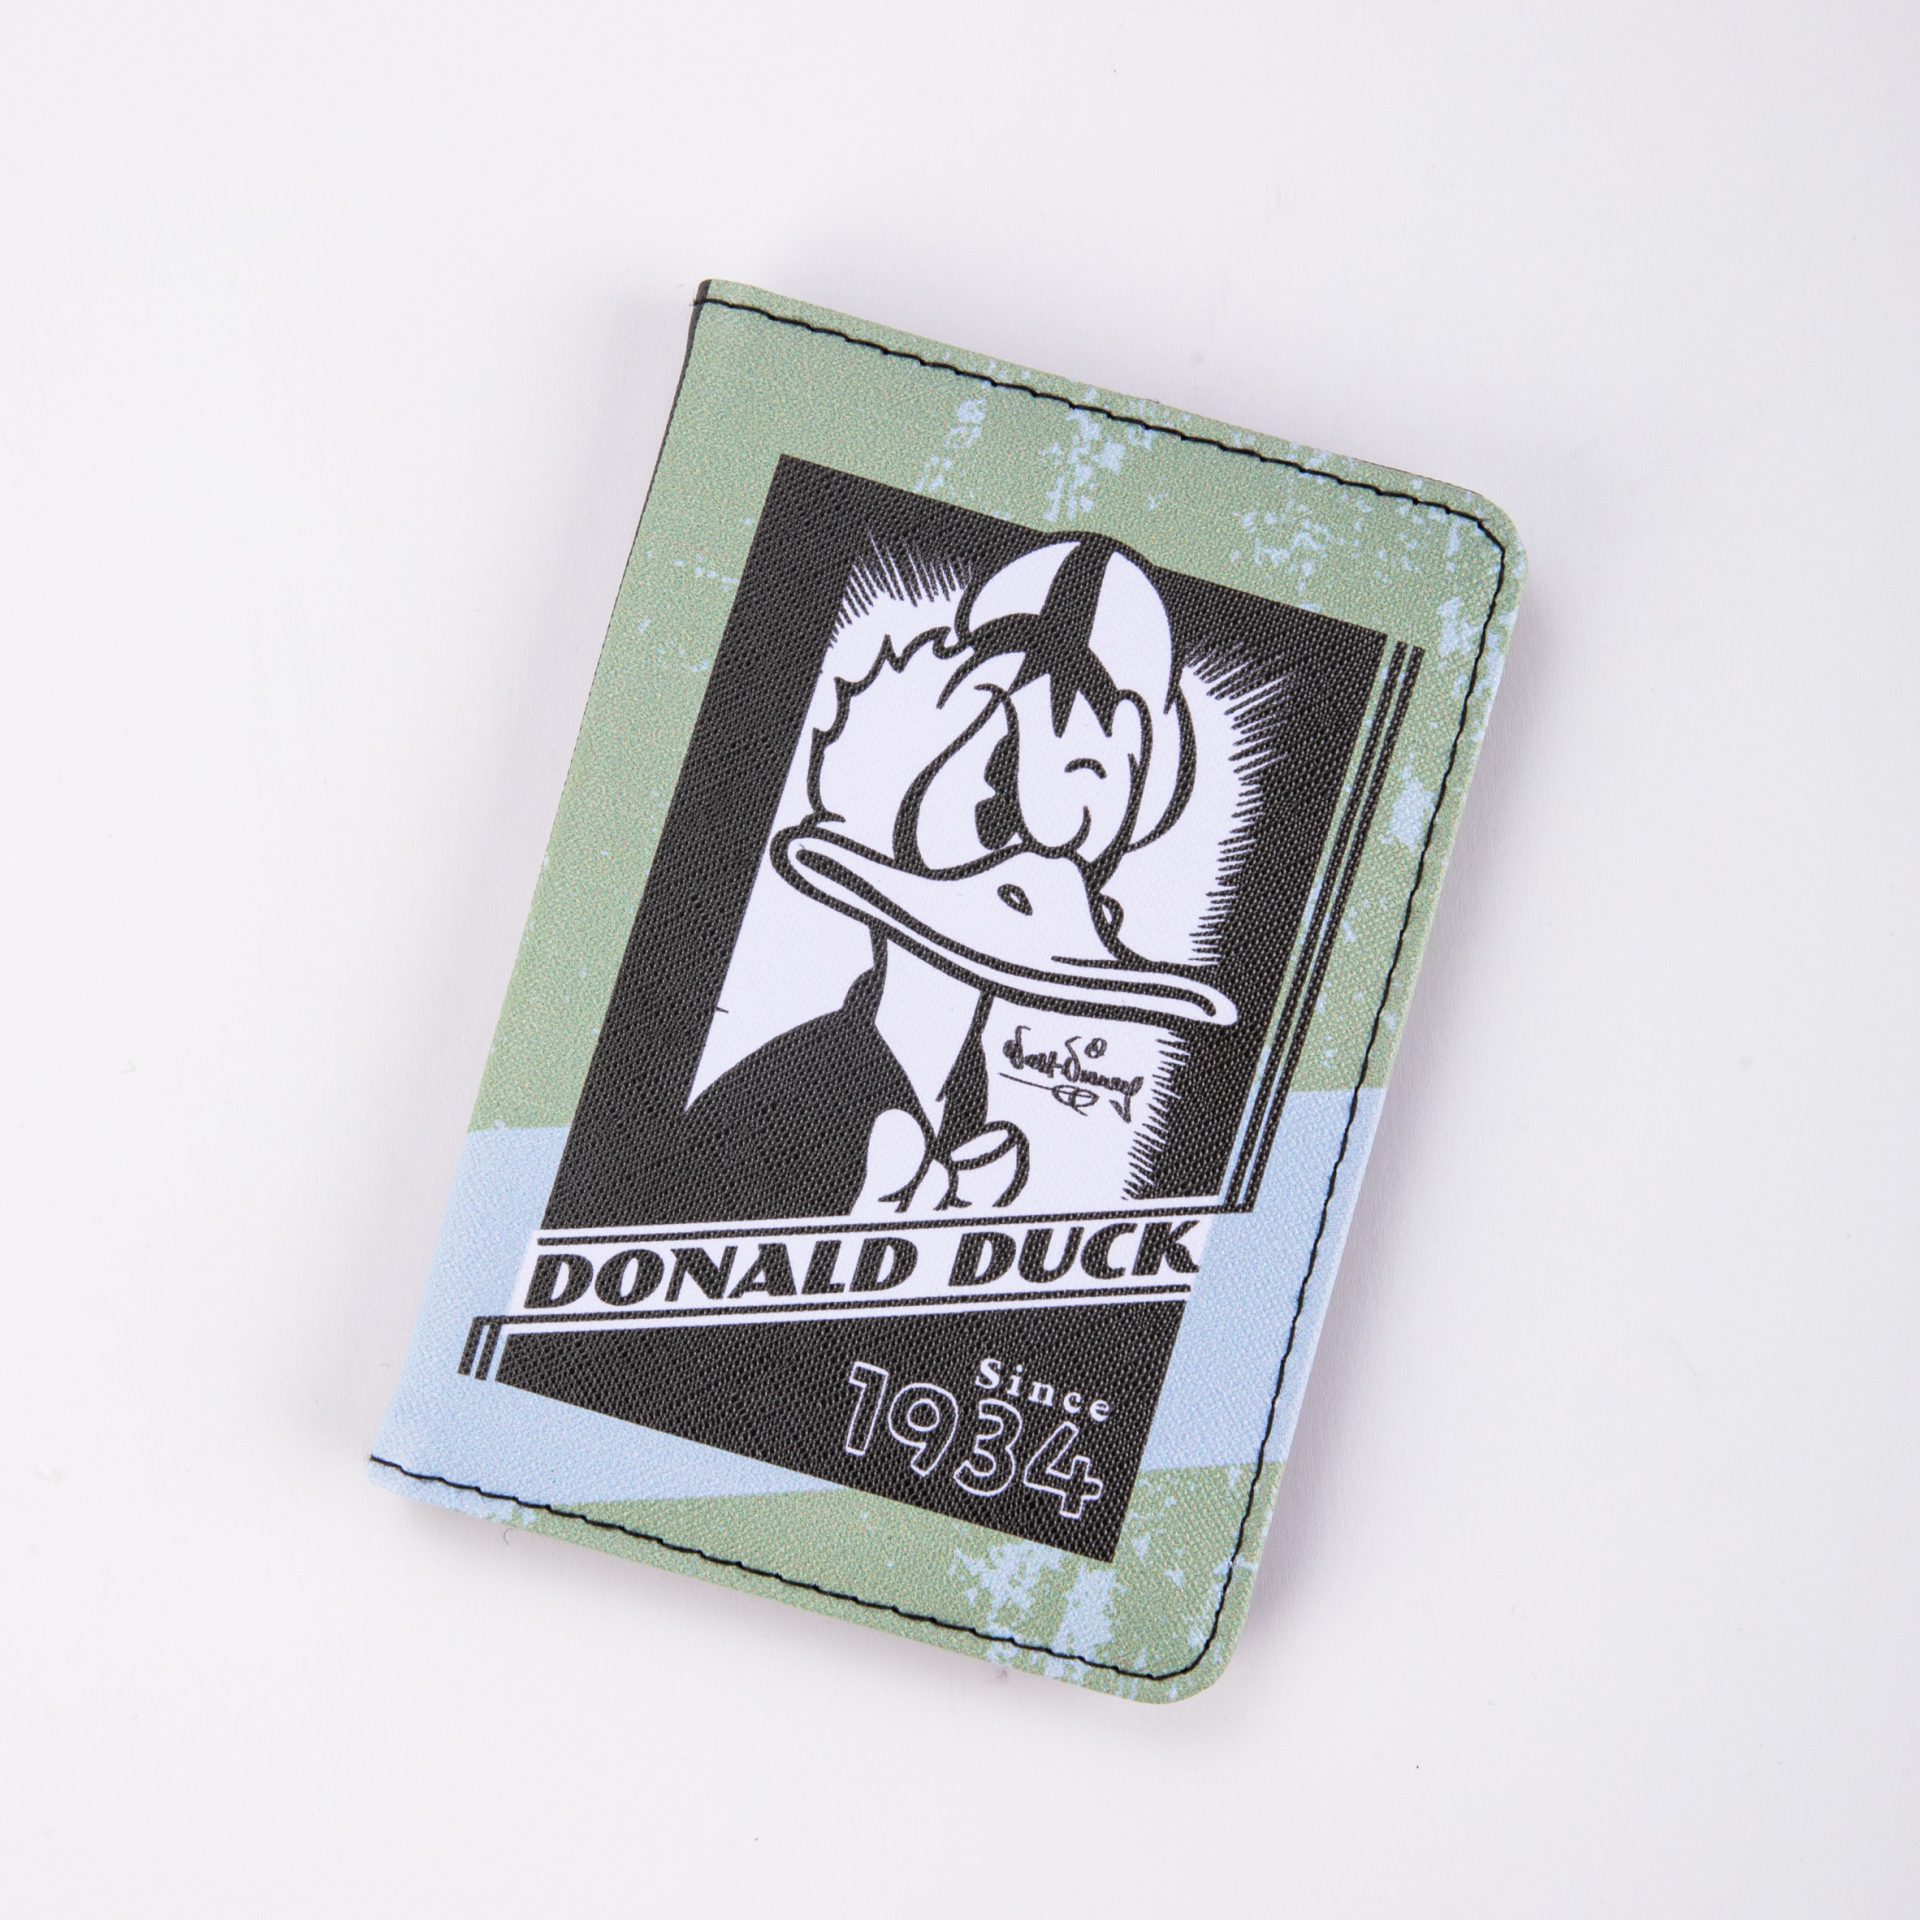 Donal Duck Passport Cover